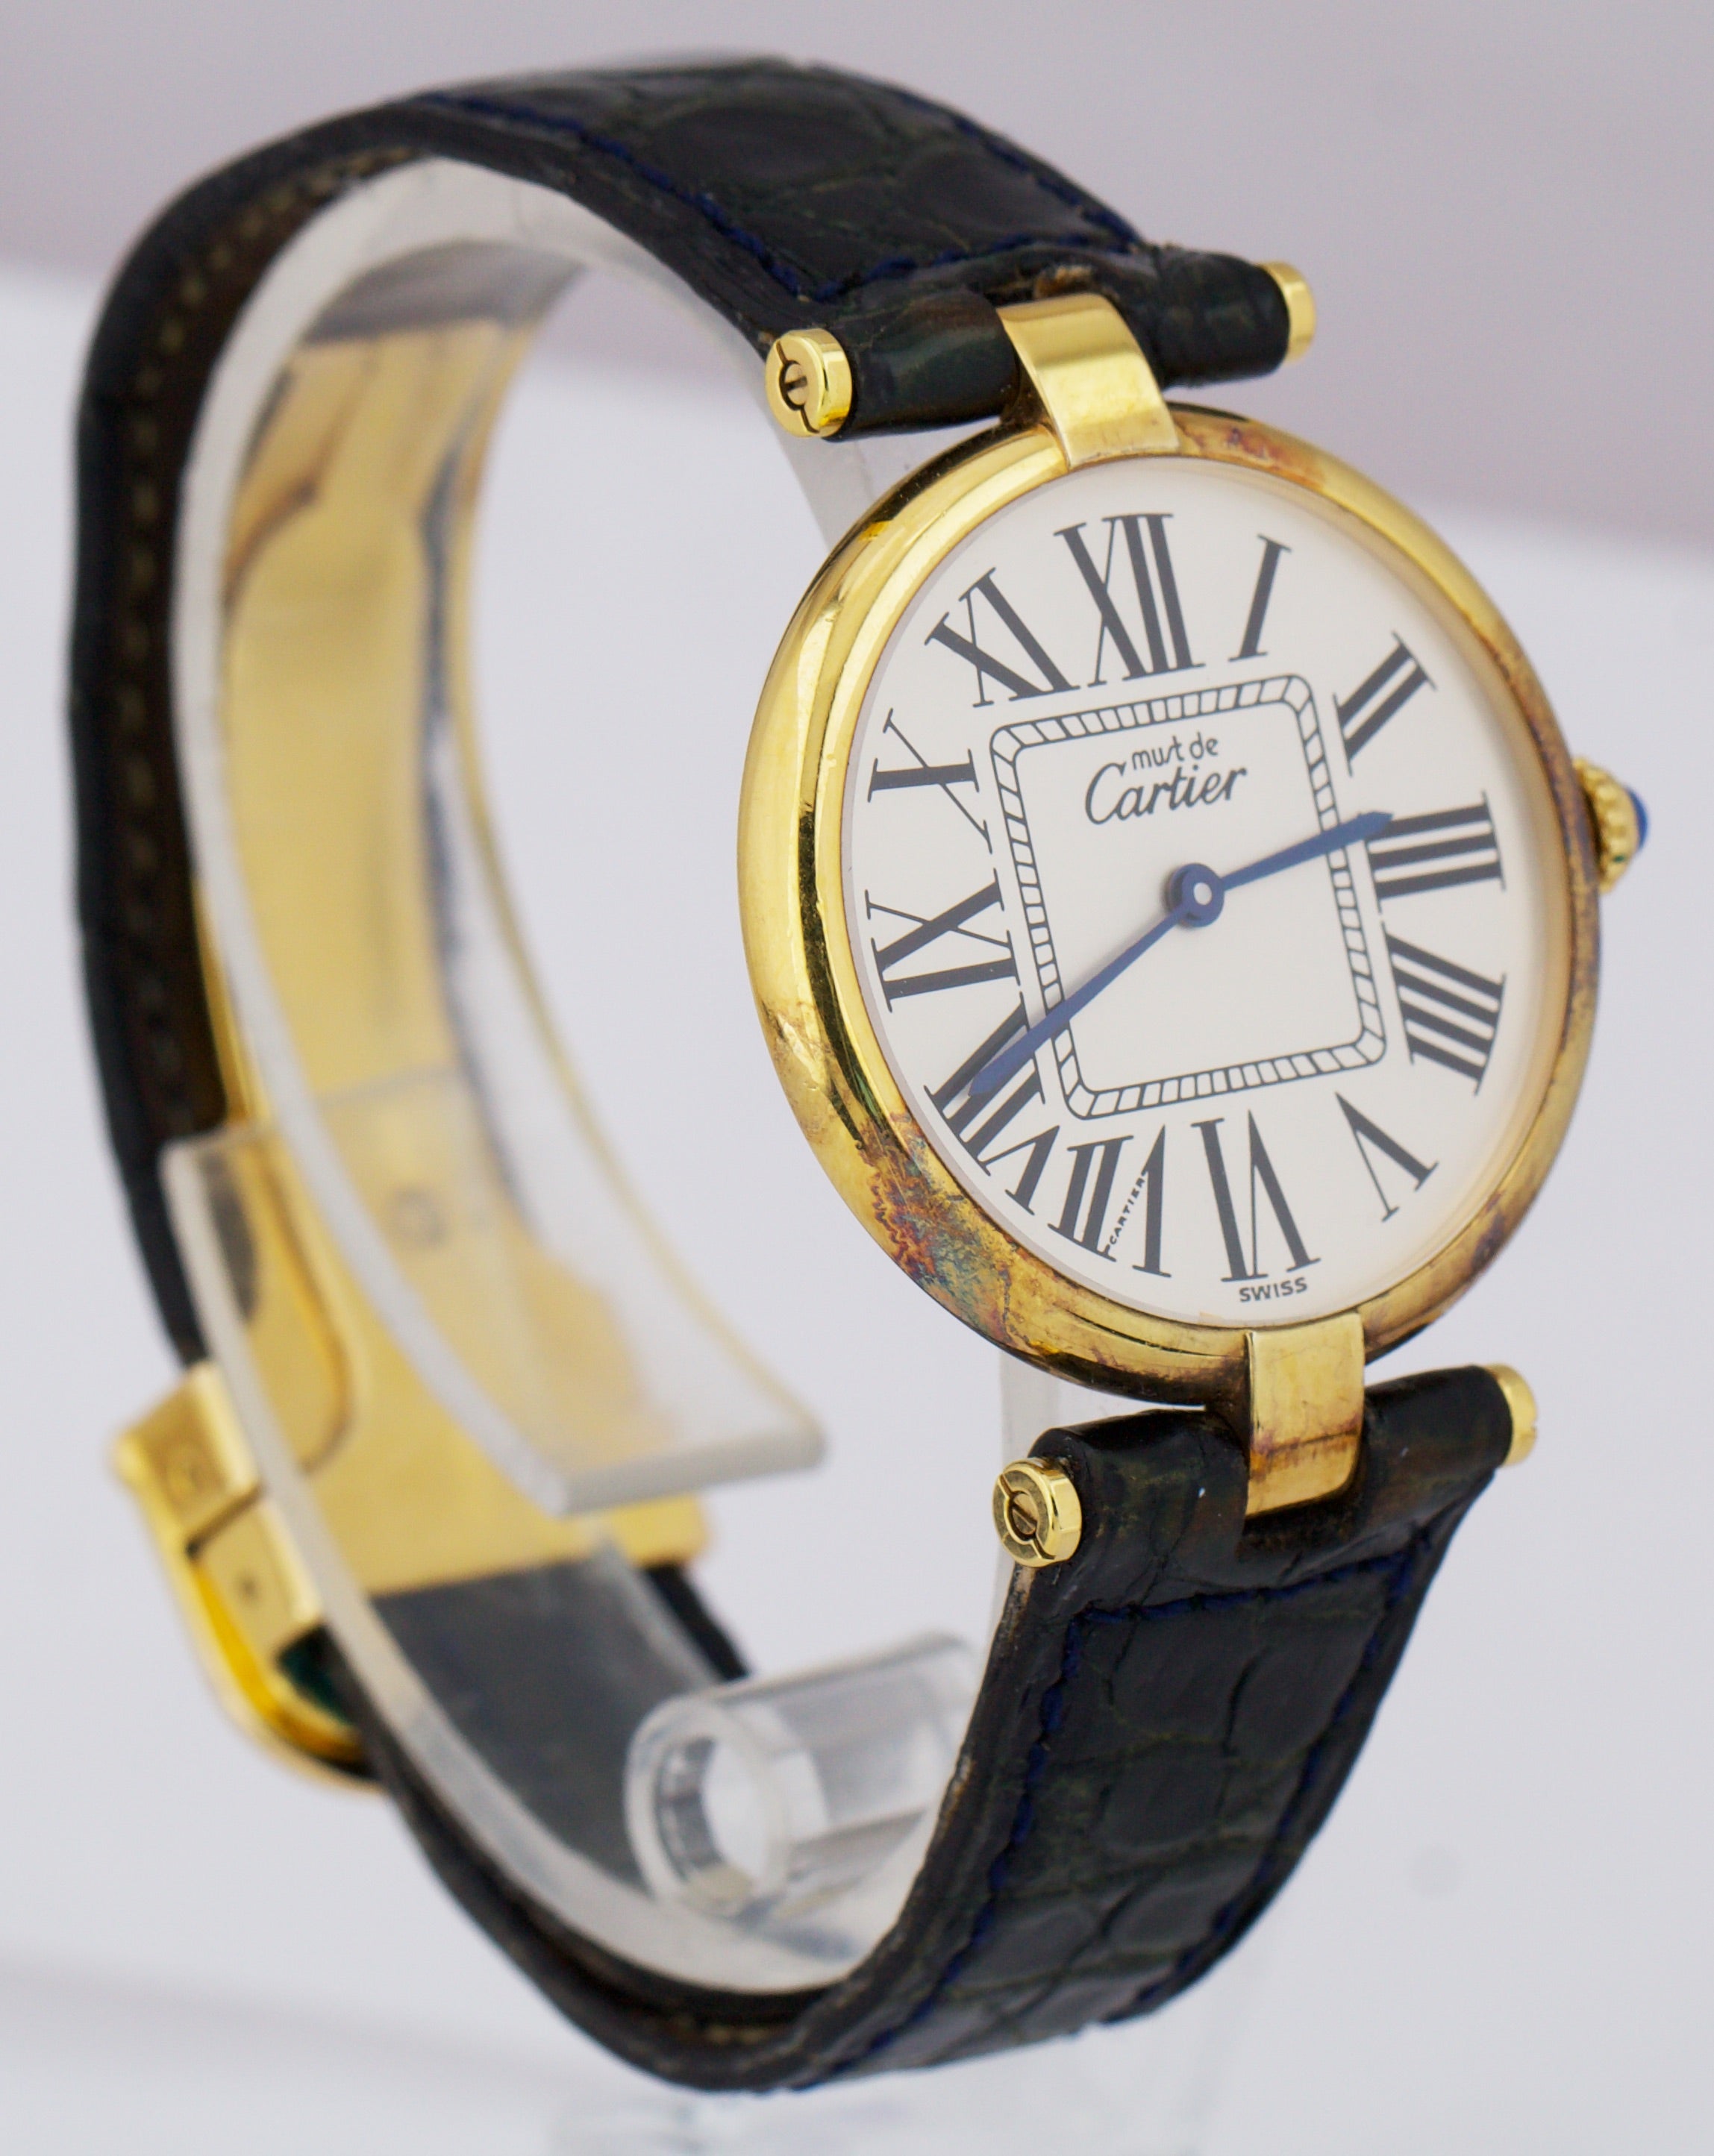 Cartier Must de Vendome Sterling Gold Vermeil 30mm Swiss Quartz Watch 590003